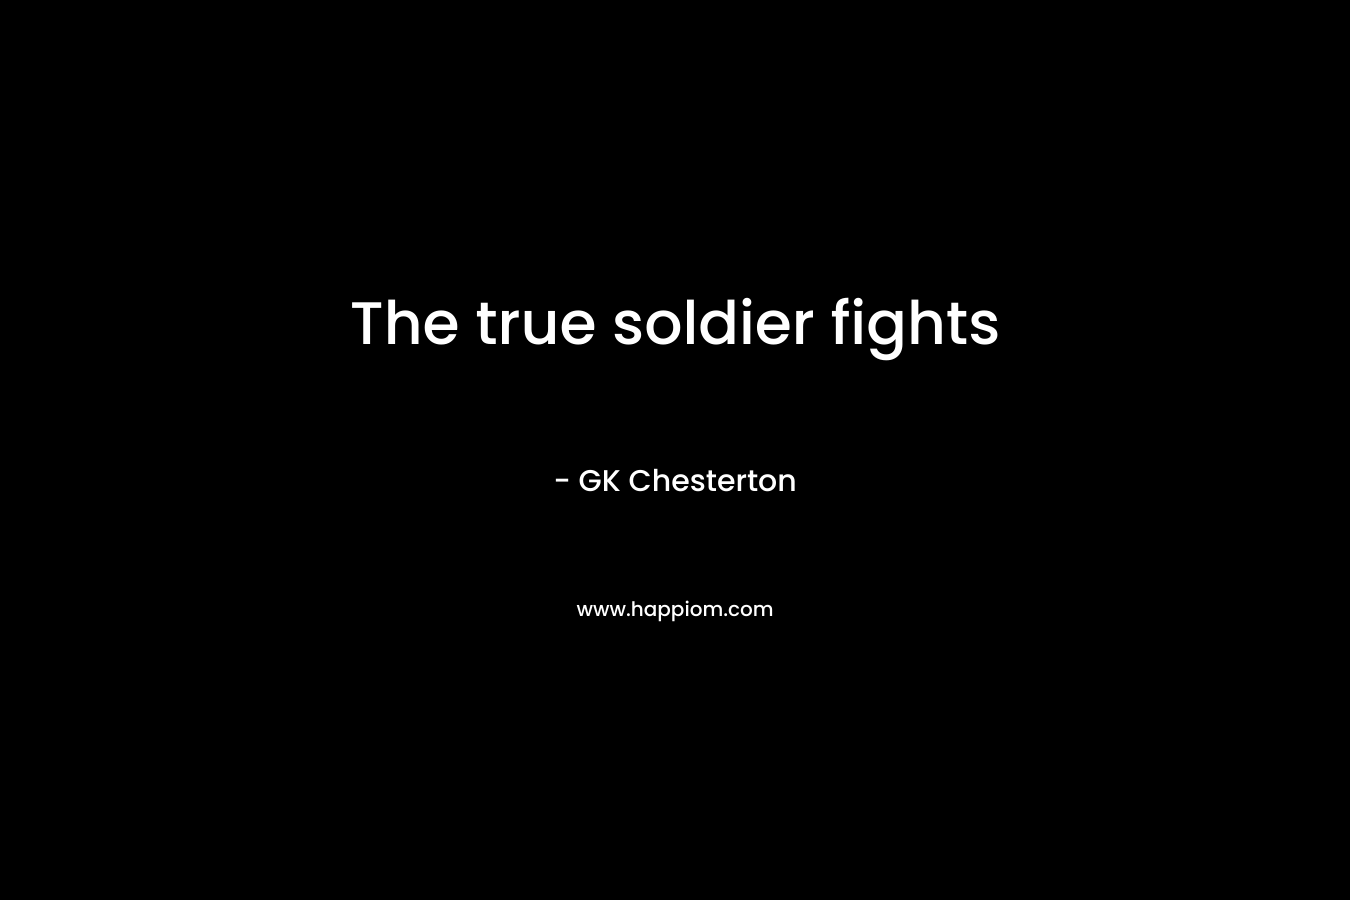 The true soldier fights